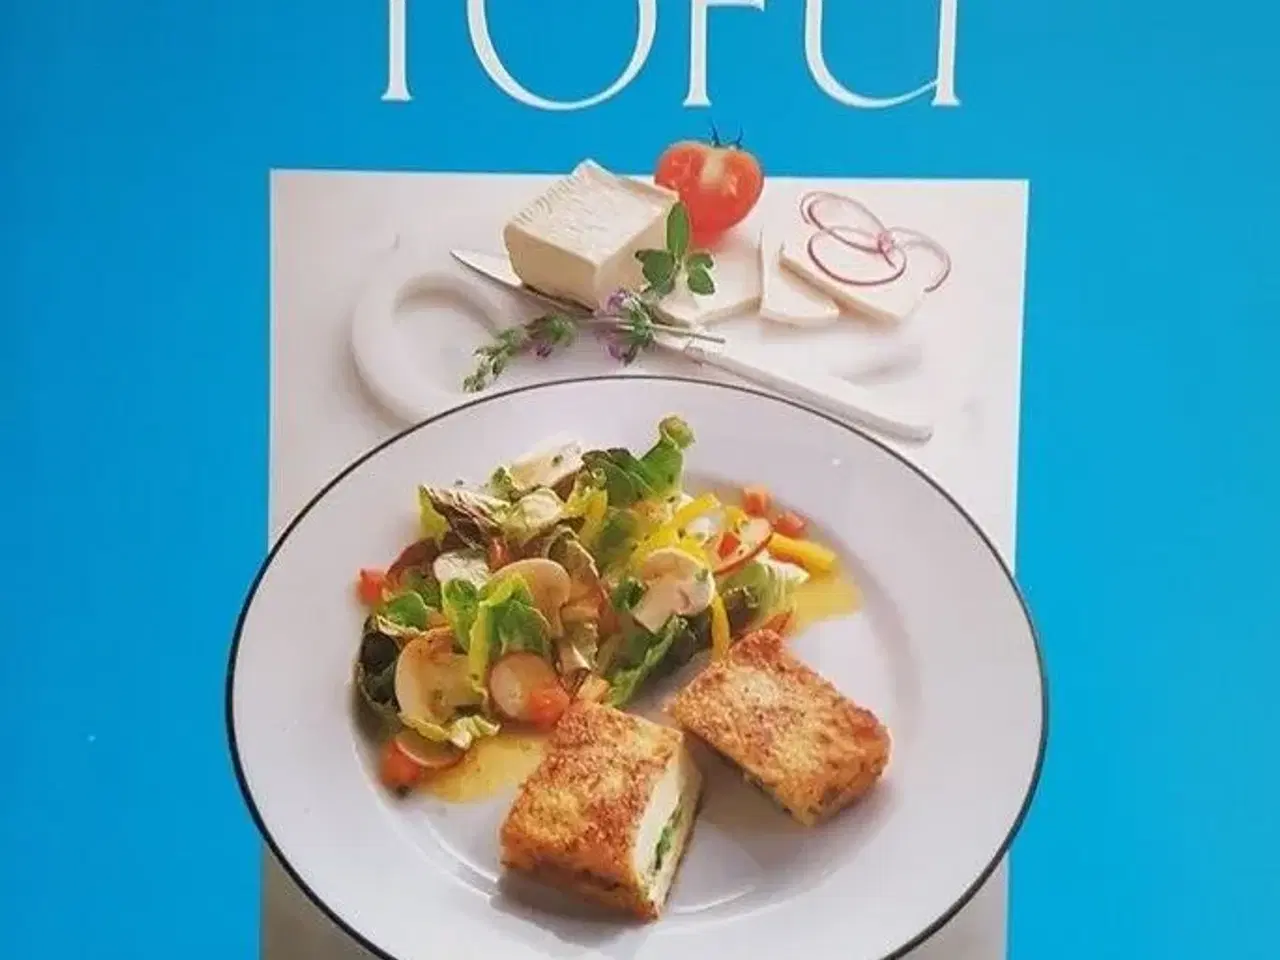 Billede 1 - Tofu - De bedste opskrifter